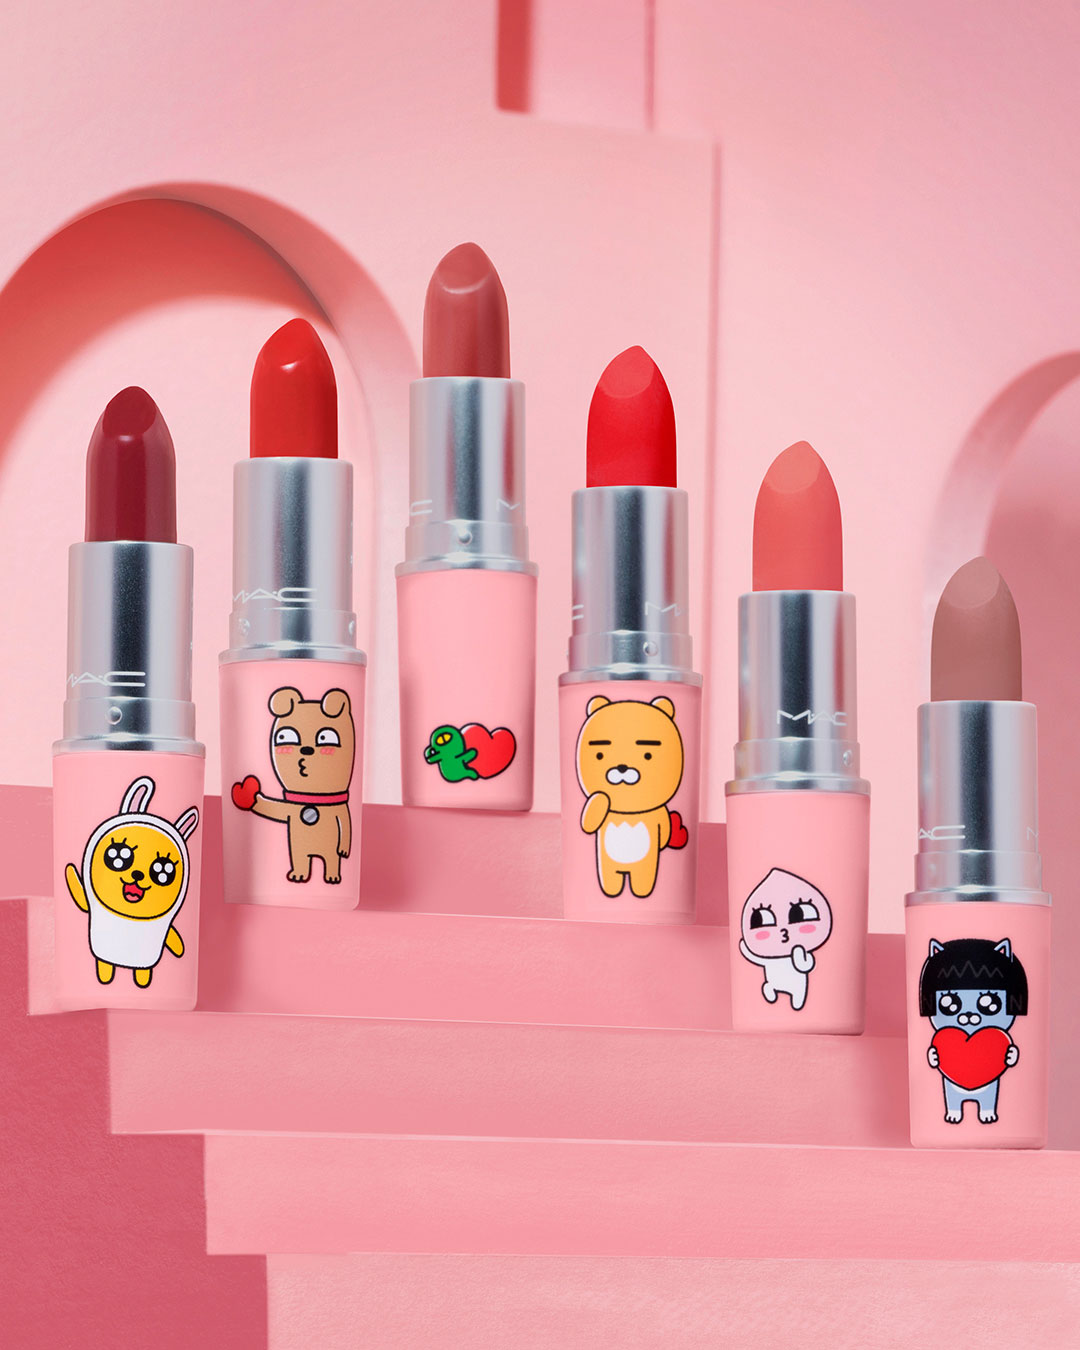 kakao friends mac cosmetics lipstick collaboration 2